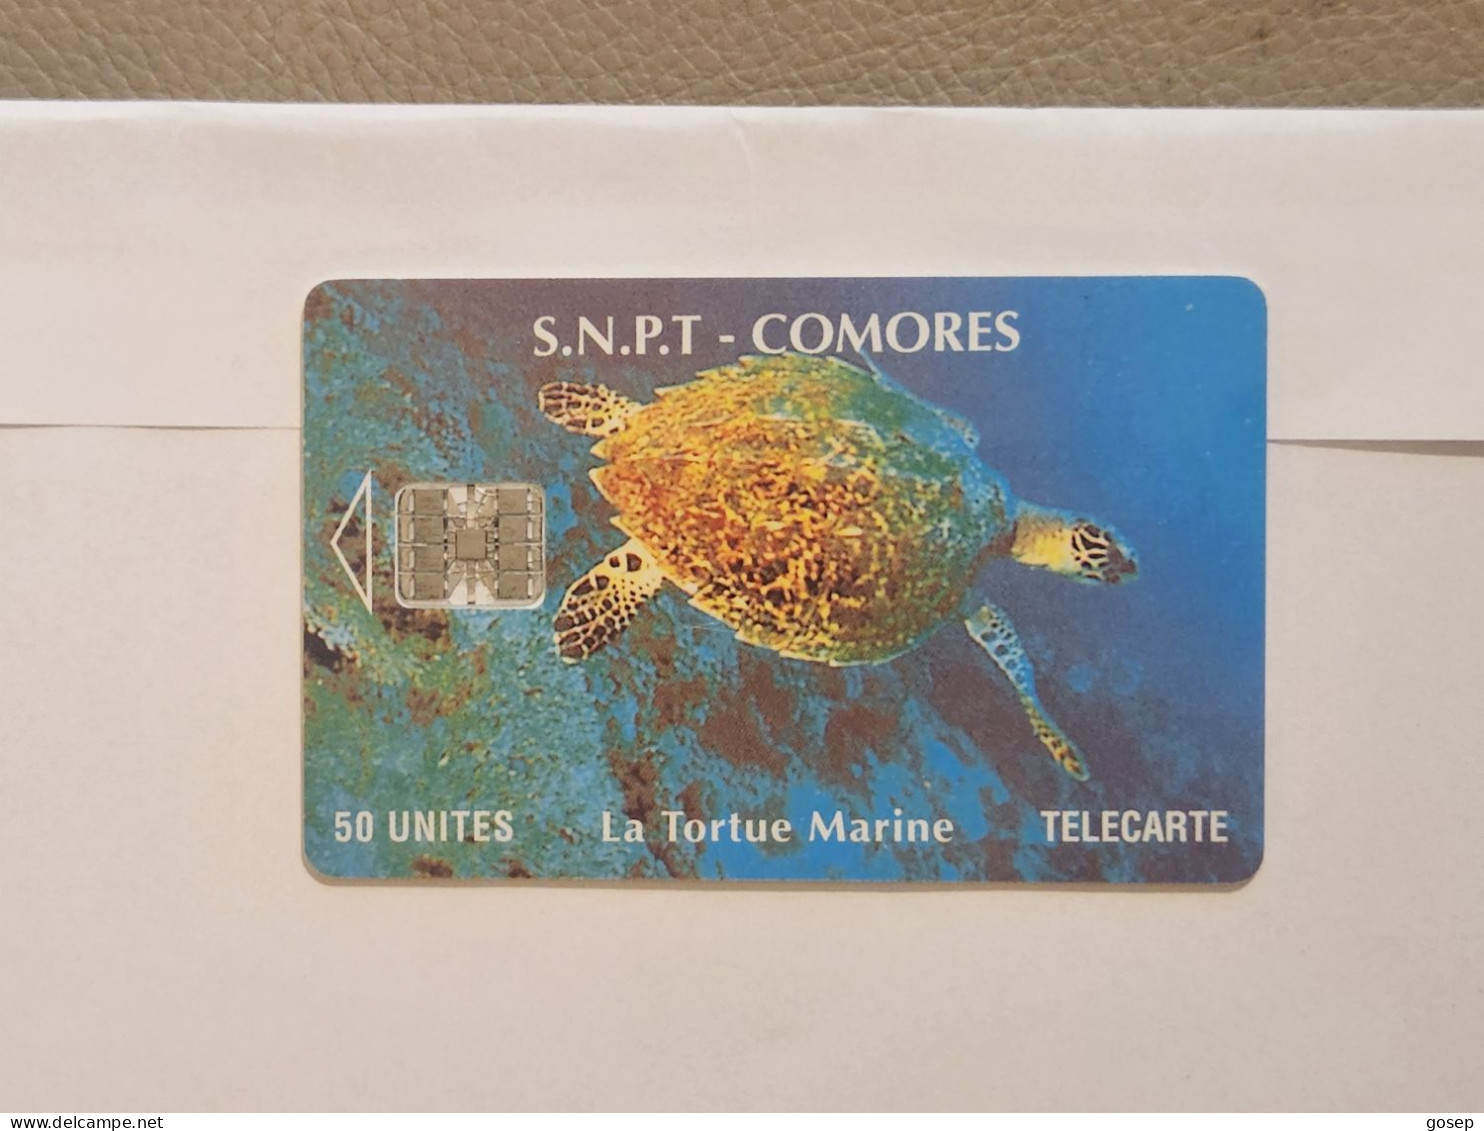 Comores-(KM-OPT-0010C)-La Tortue Marine-(9)-(50units)-(C5B155335)-used Card+1card Prepiad/gift Free - Comores